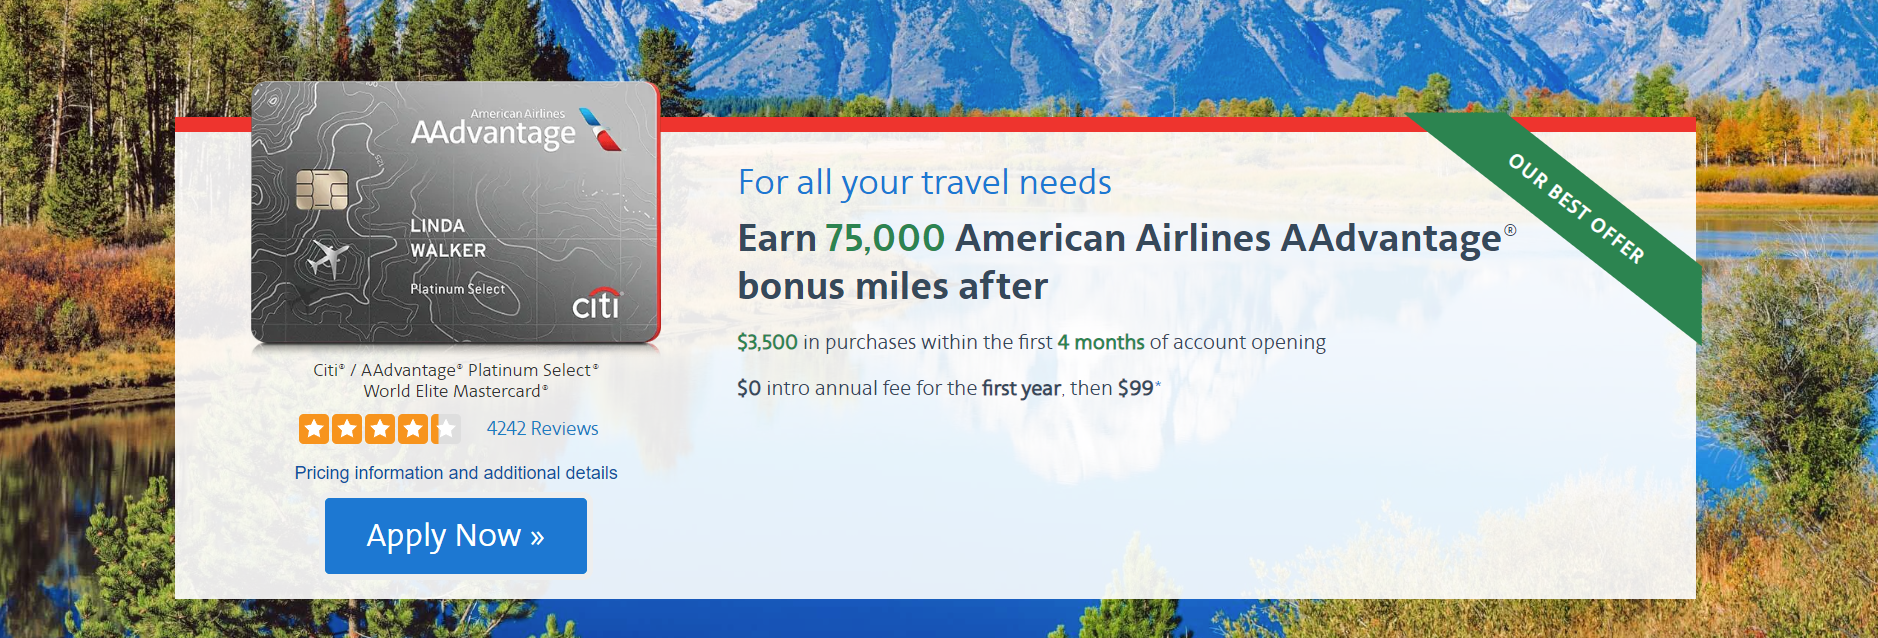 a screenshot of a travel ad